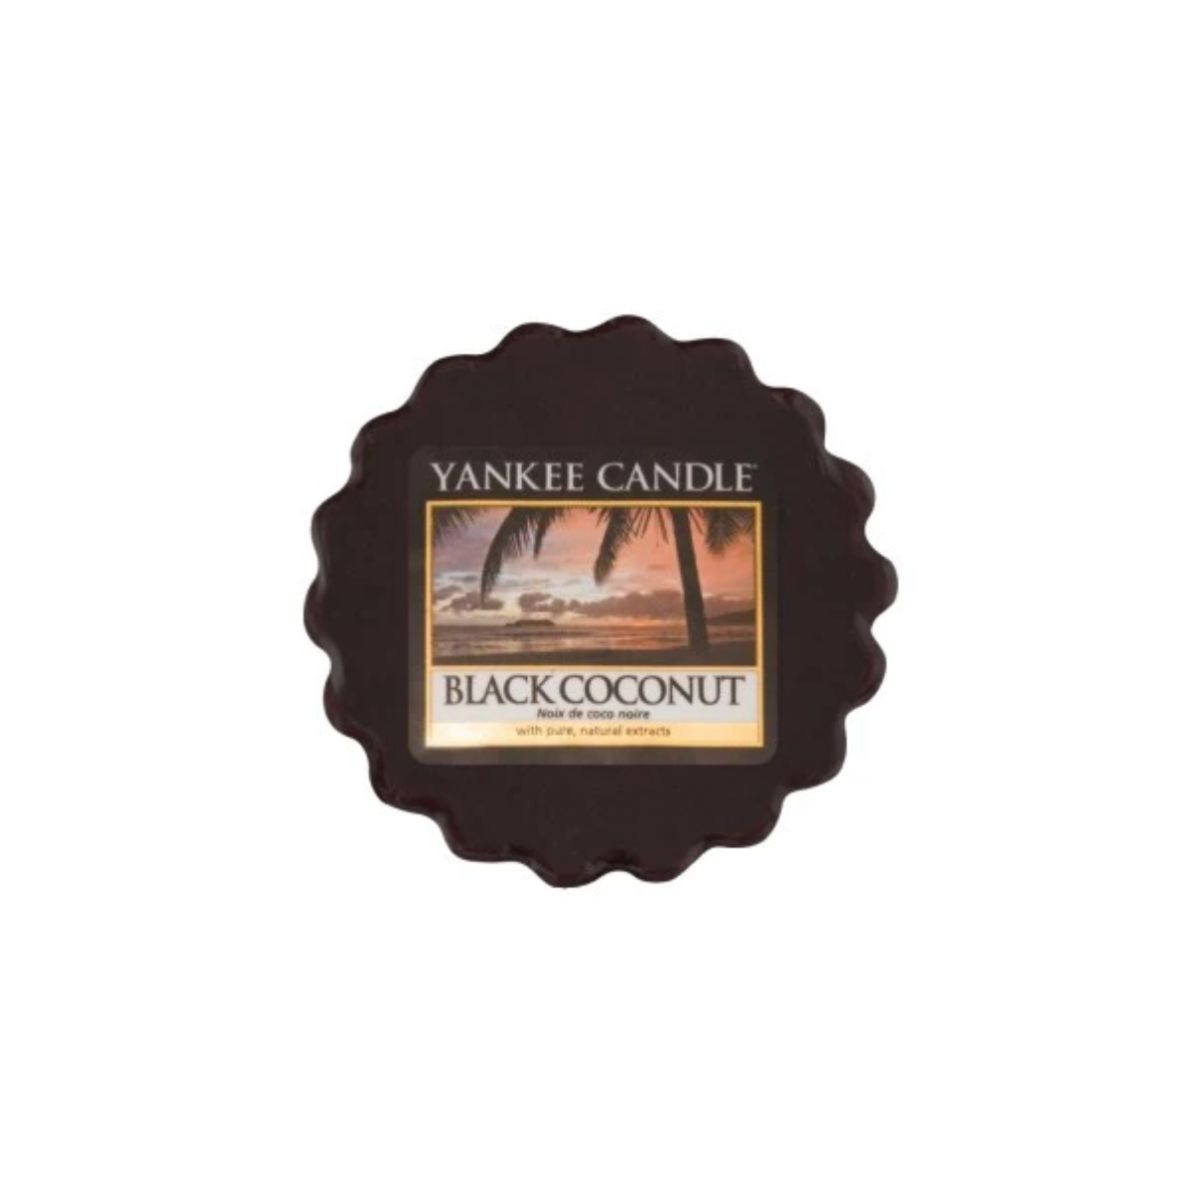 Tarte Black Coconut Yankee Candle